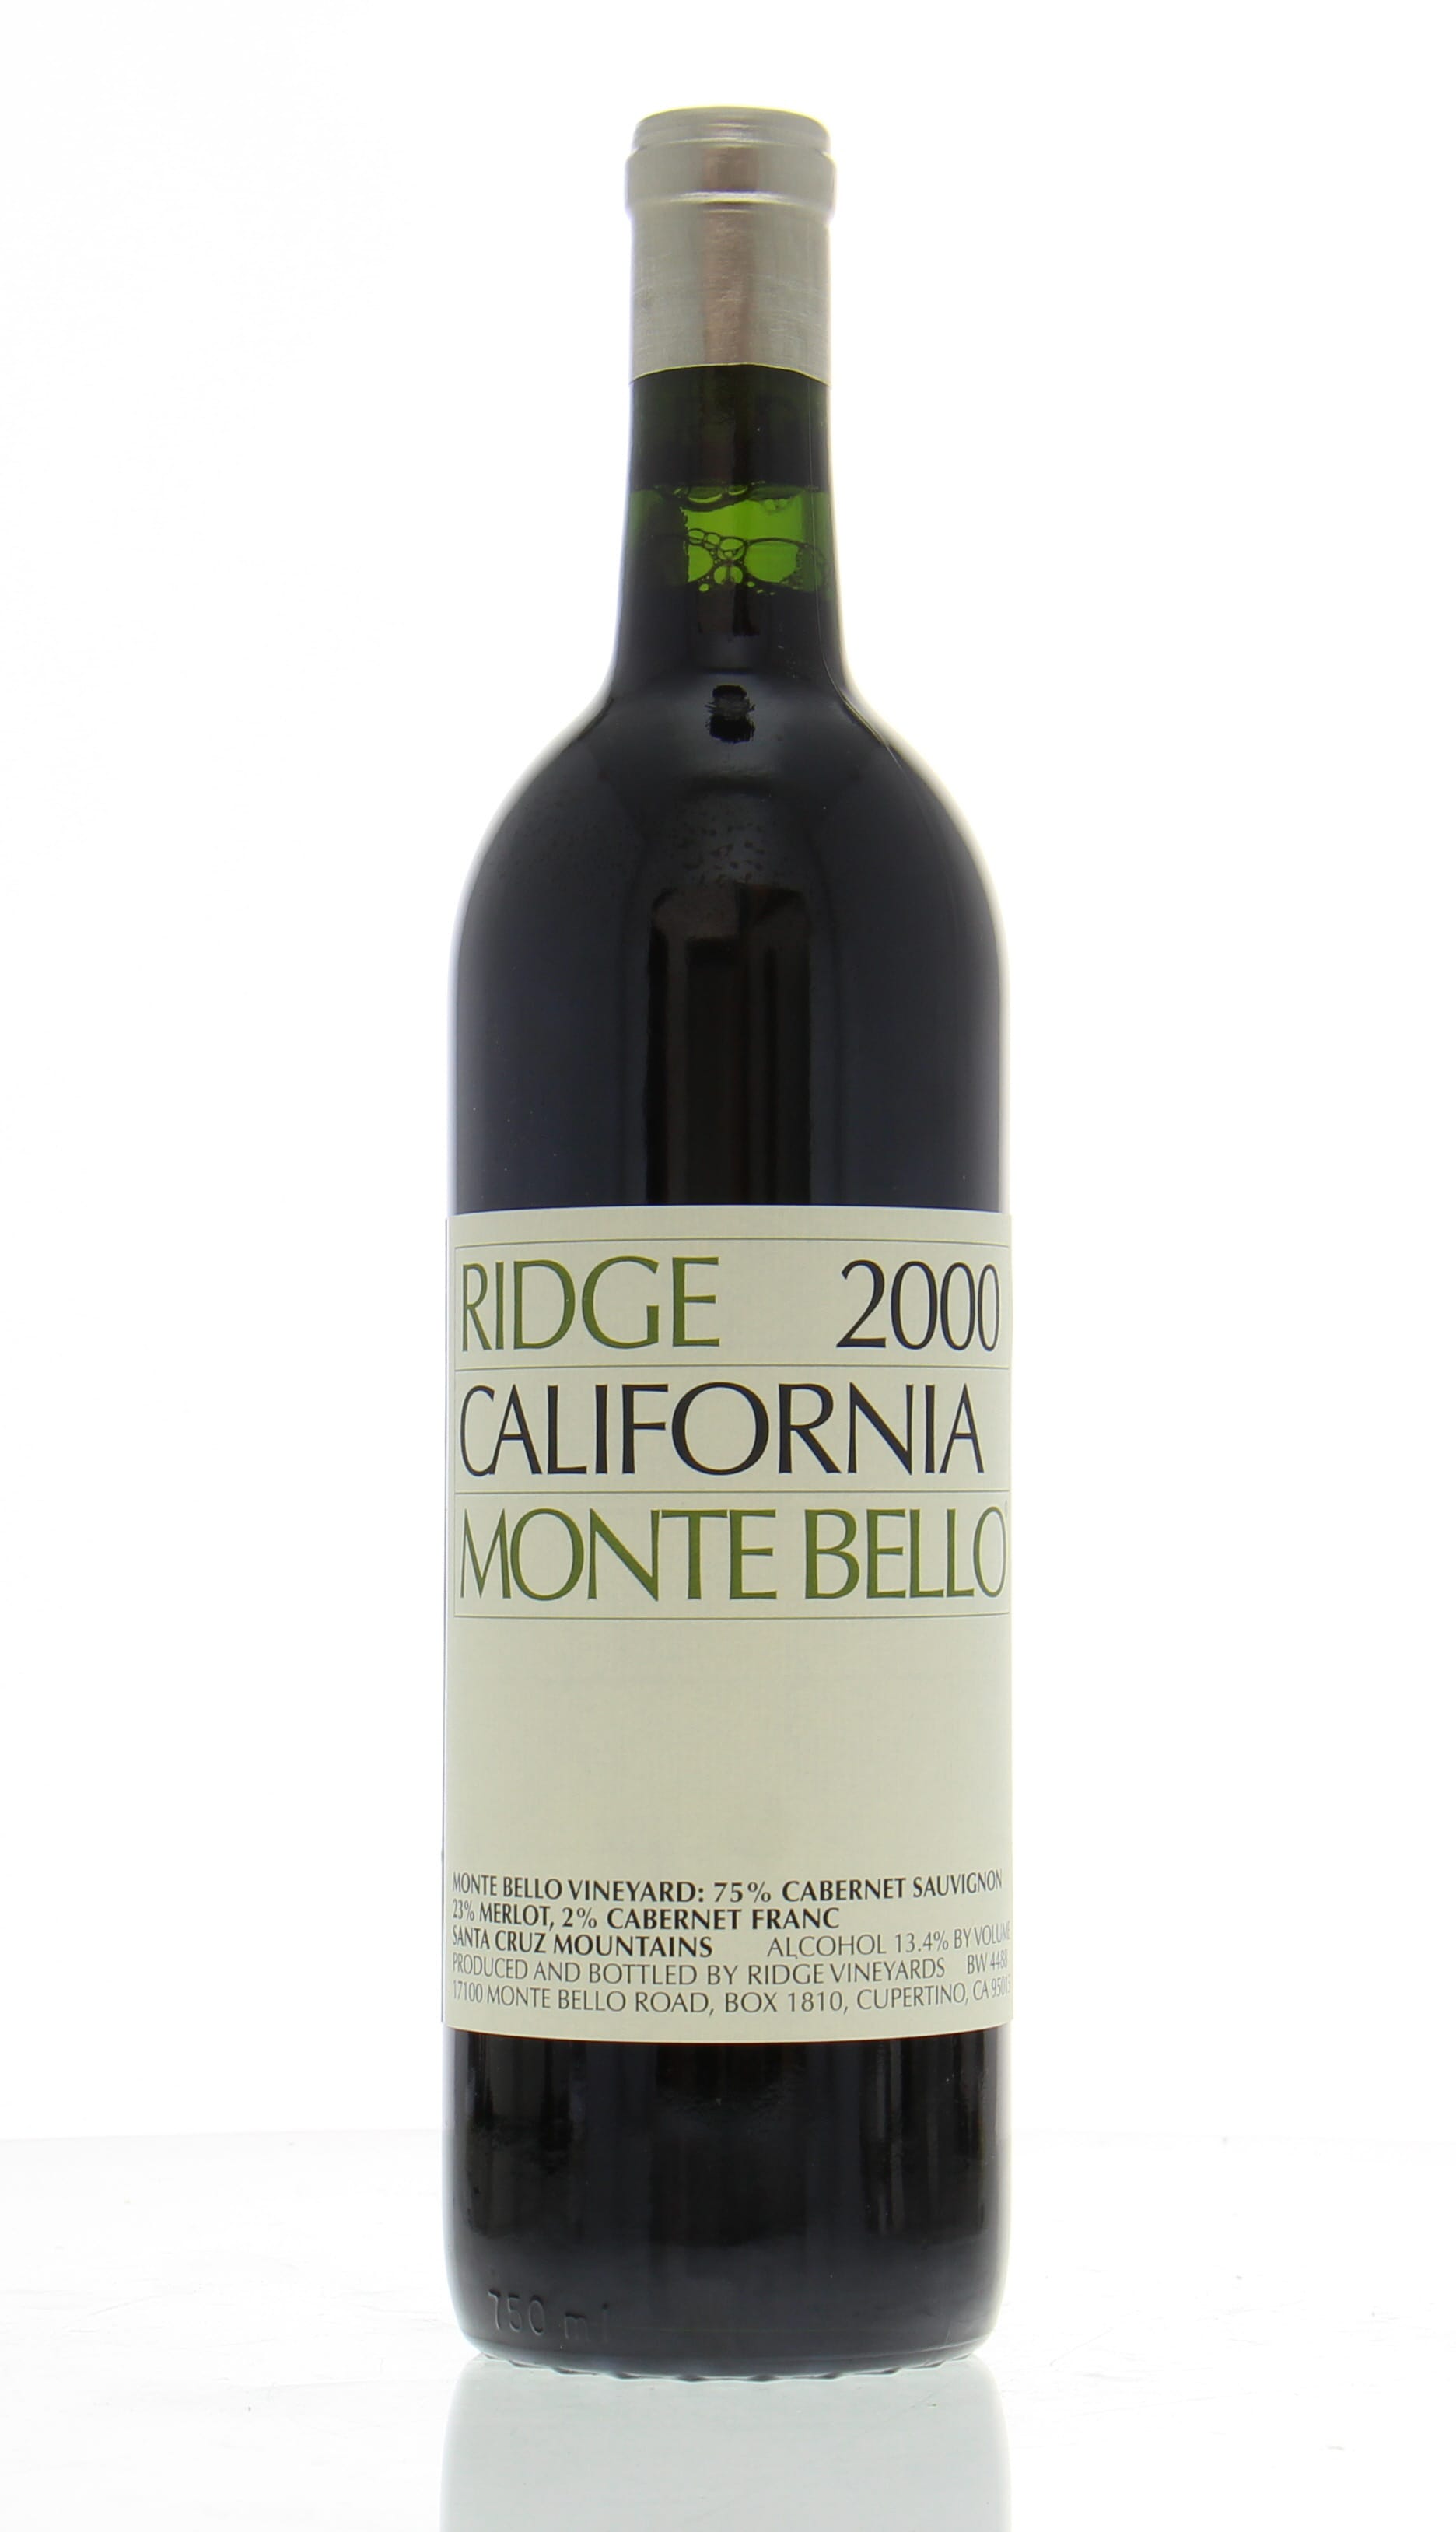 Ridge - Monte Bello 2000